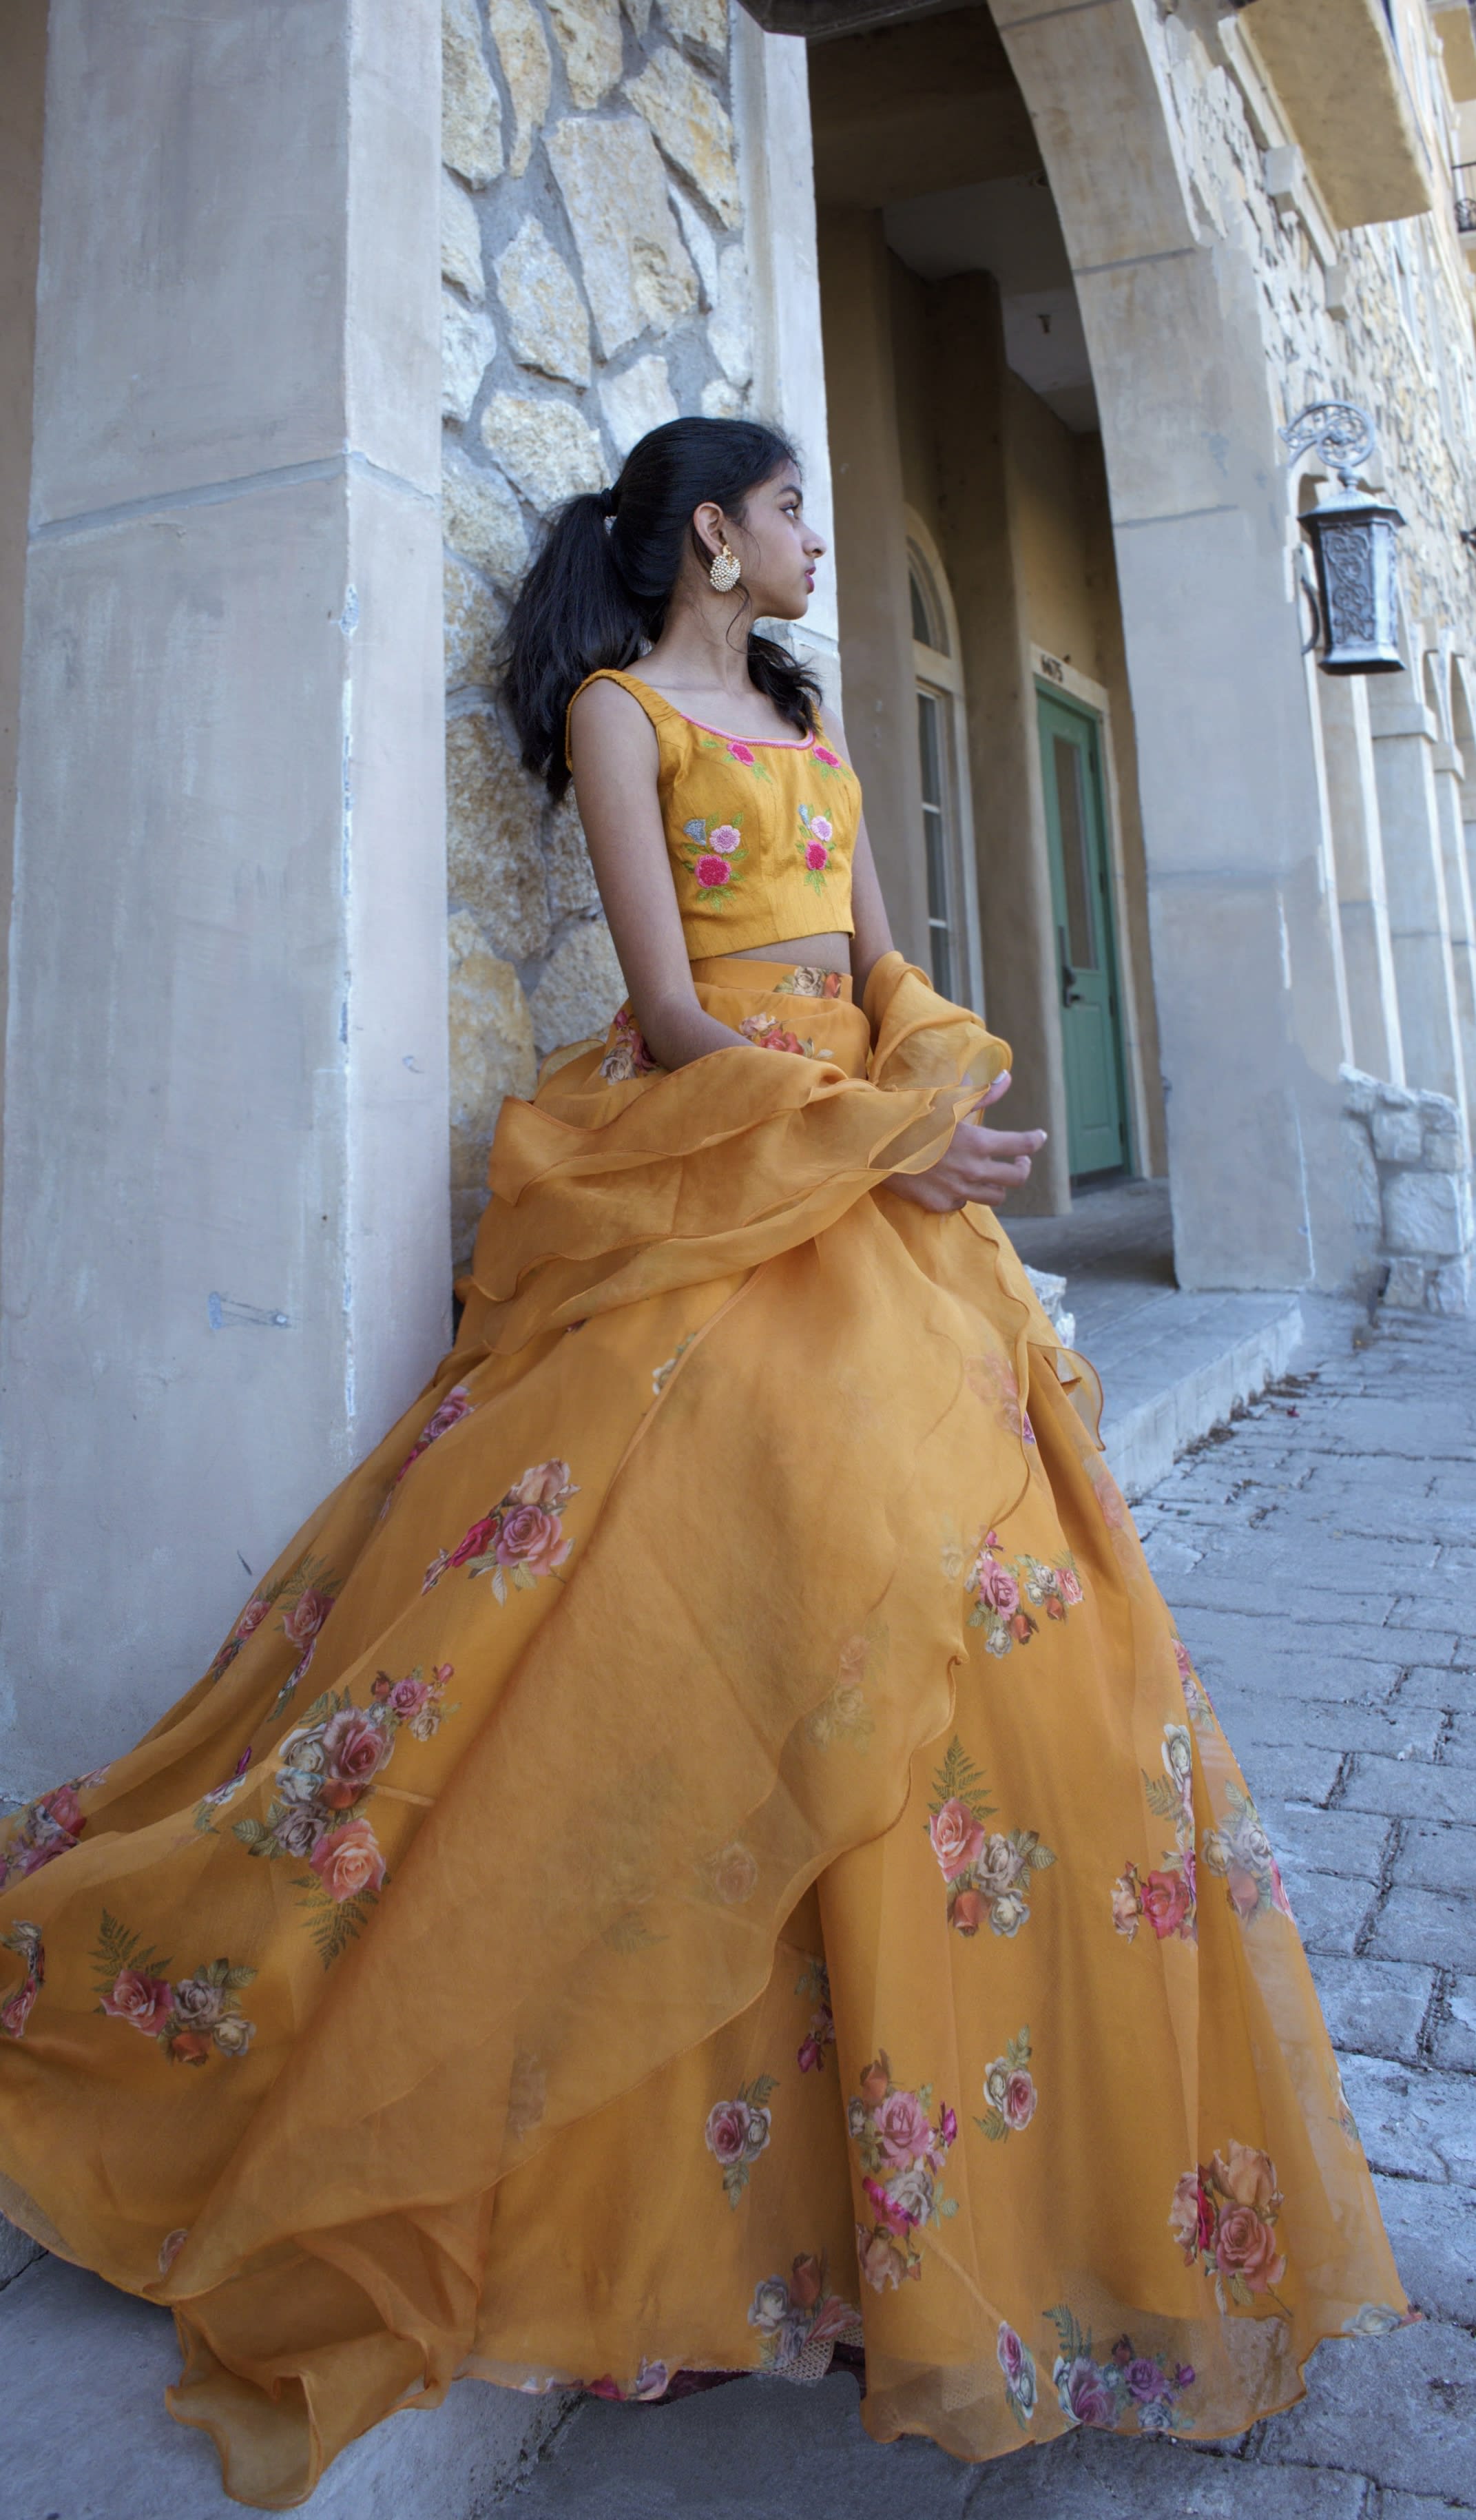 Masaba Gupta Dresses | Masaba Gupta Collection Online - Kalki Fashion Blog